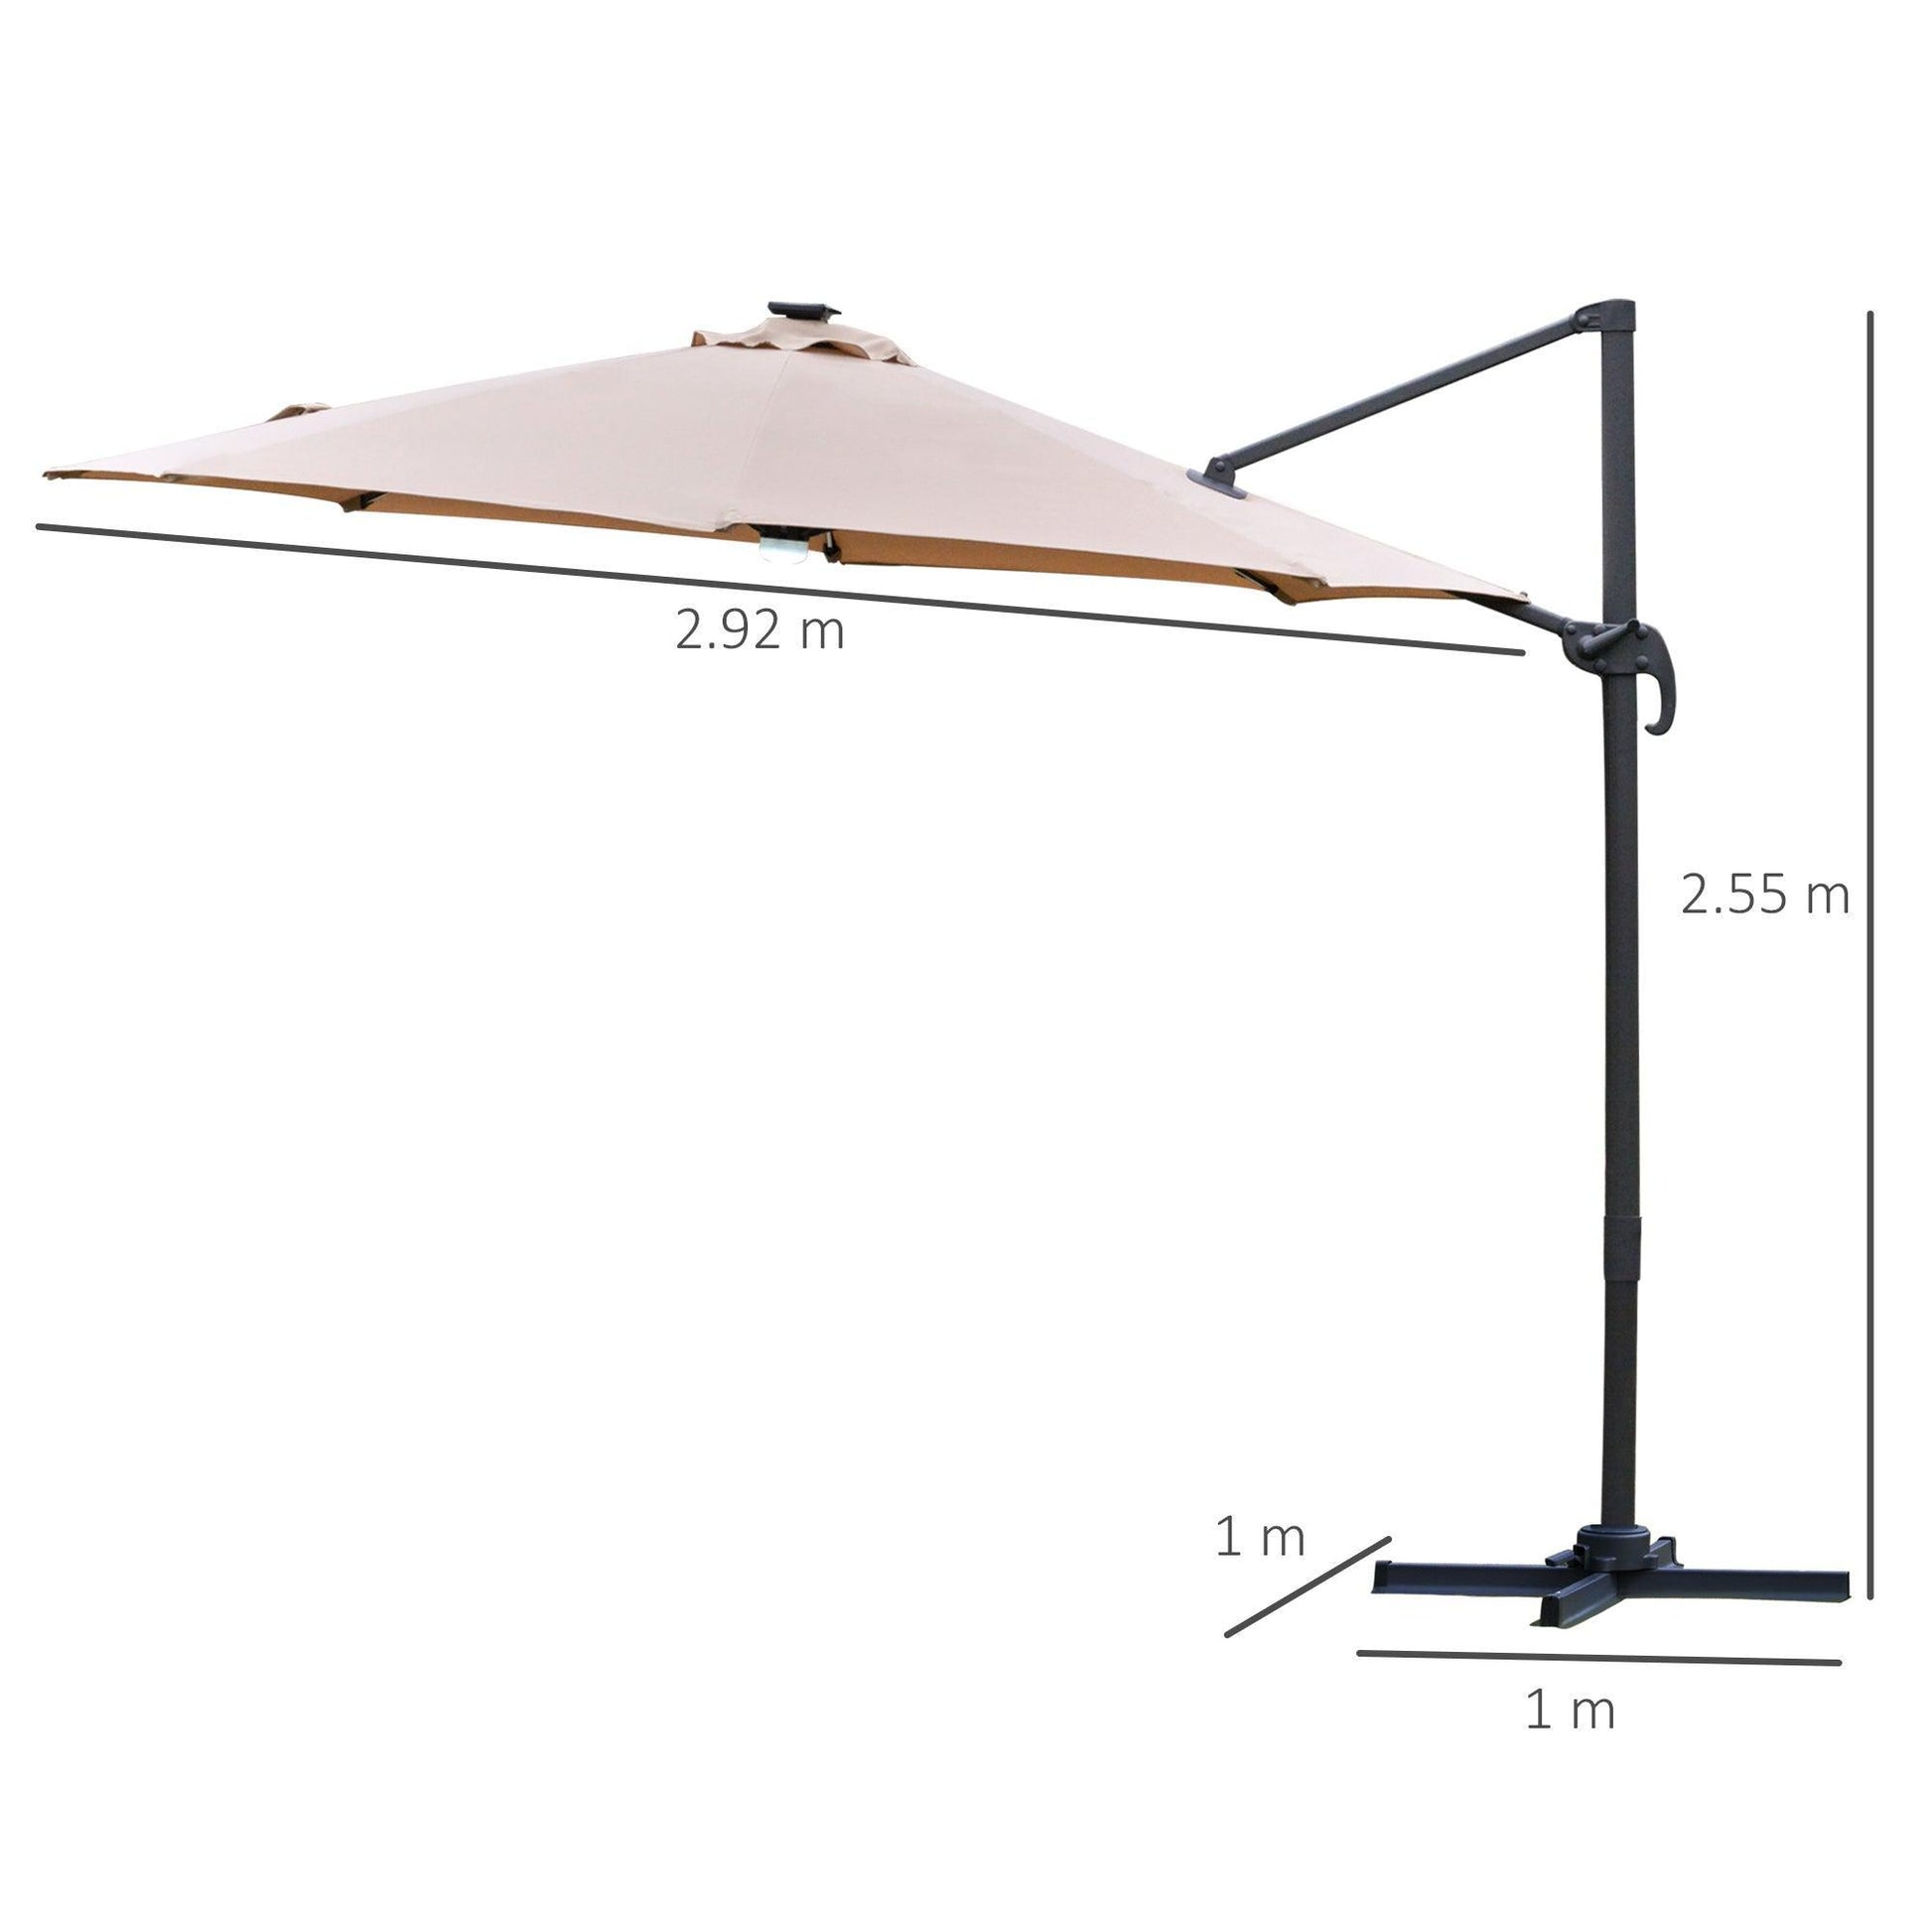 Outsunny 3m Cantilever Garden Umbrella, Solar Light, 360° Rotation - ALL4U RETAILER LTD